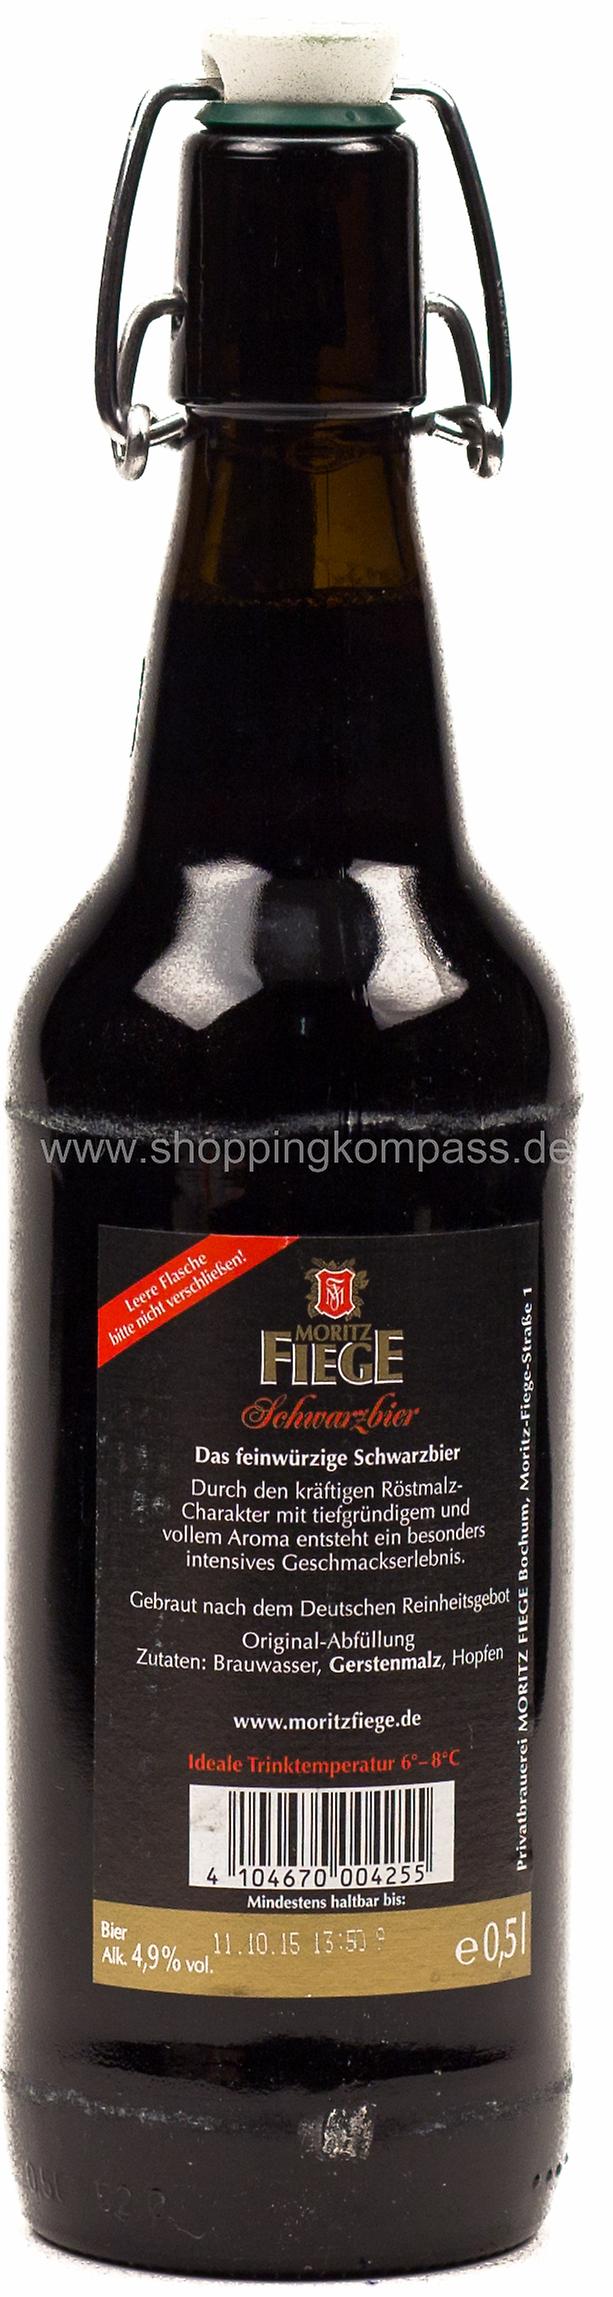 Moritz Fiege Schwarzbier Cola Bügel Kasten 20 x 0,5 l Glas Mehrweg